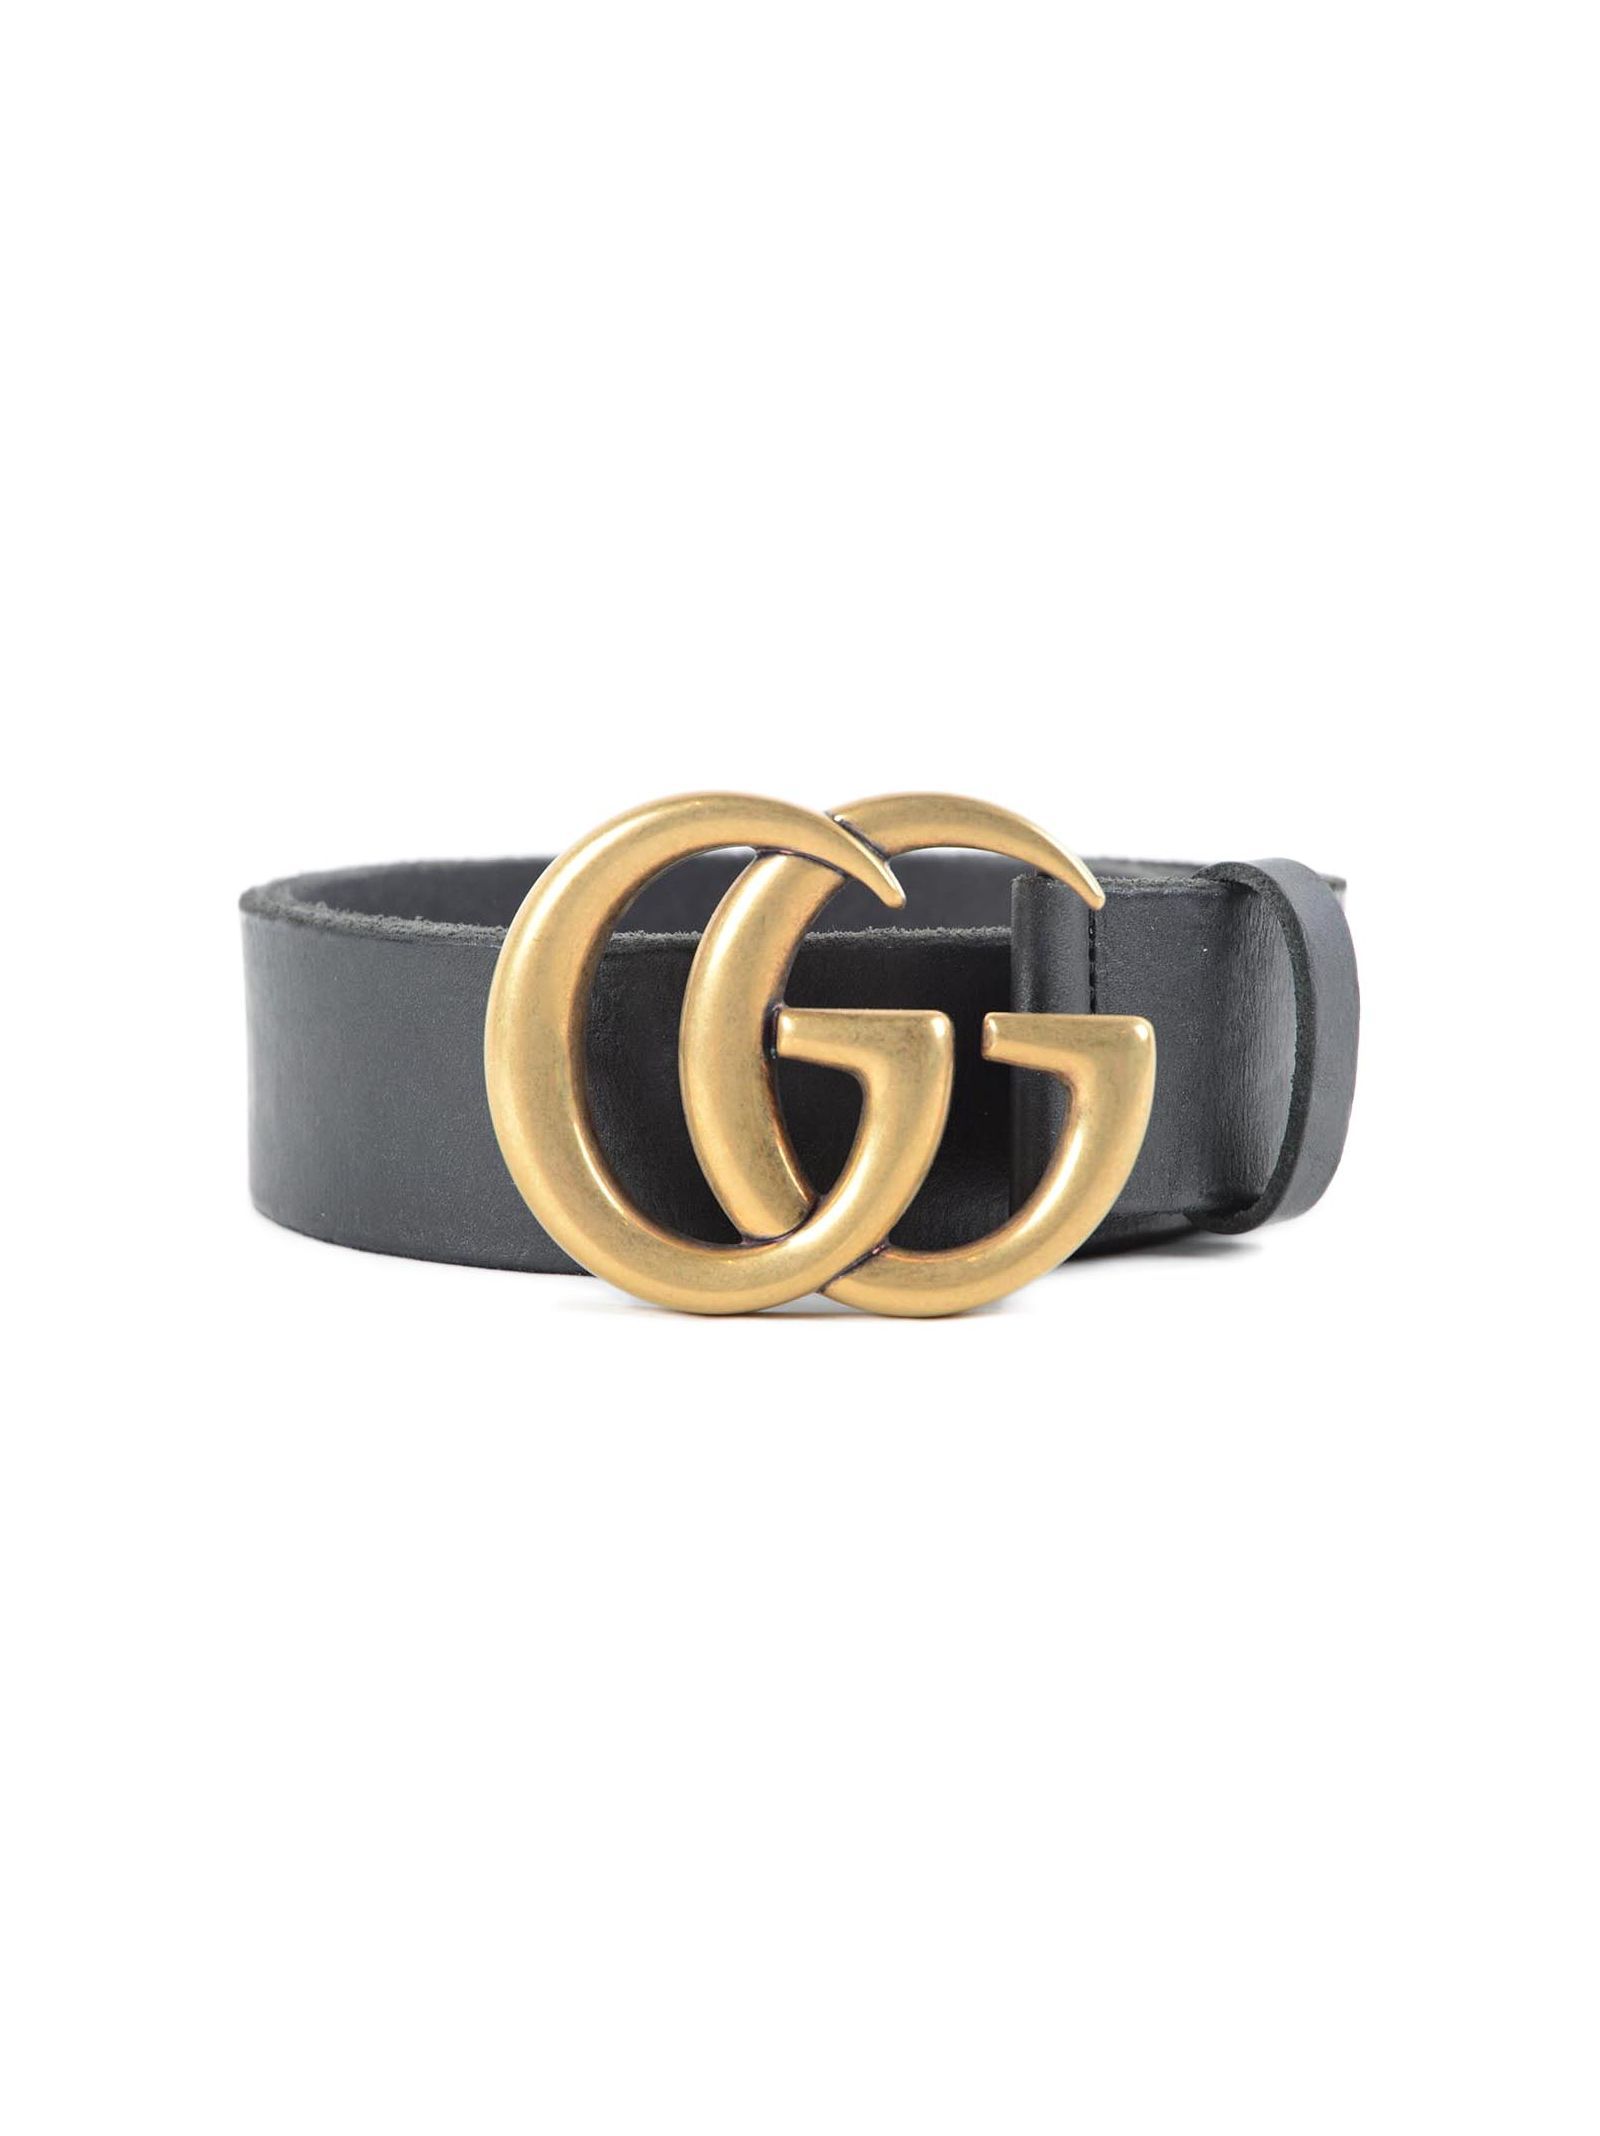 Gucci Gg Marmont Belt 40 | Italist.com US